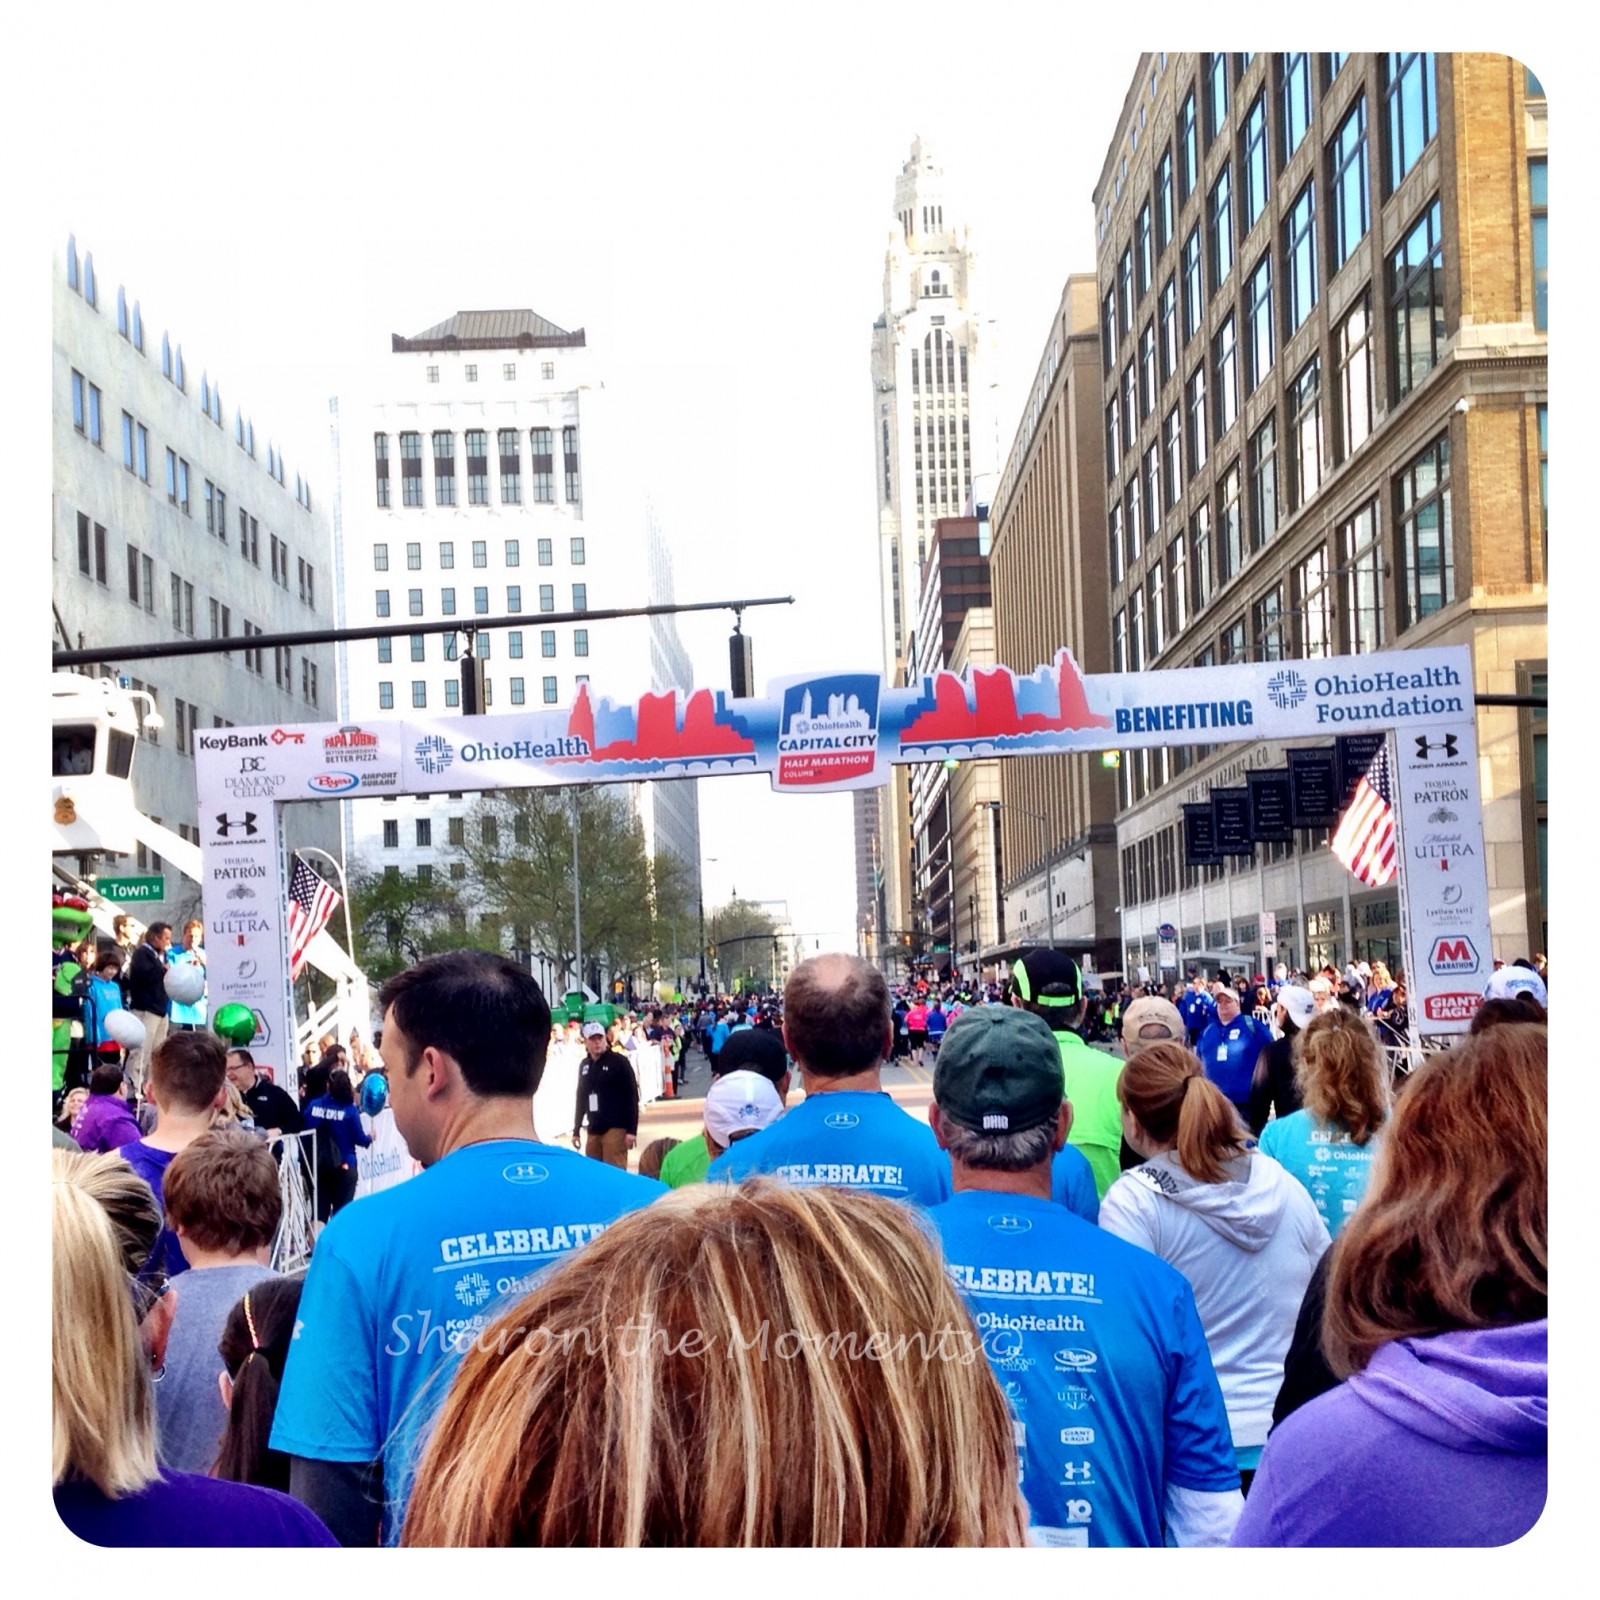 Cap City Half Marathon and 5K in Columbus OH|Sharon the Moments Blog